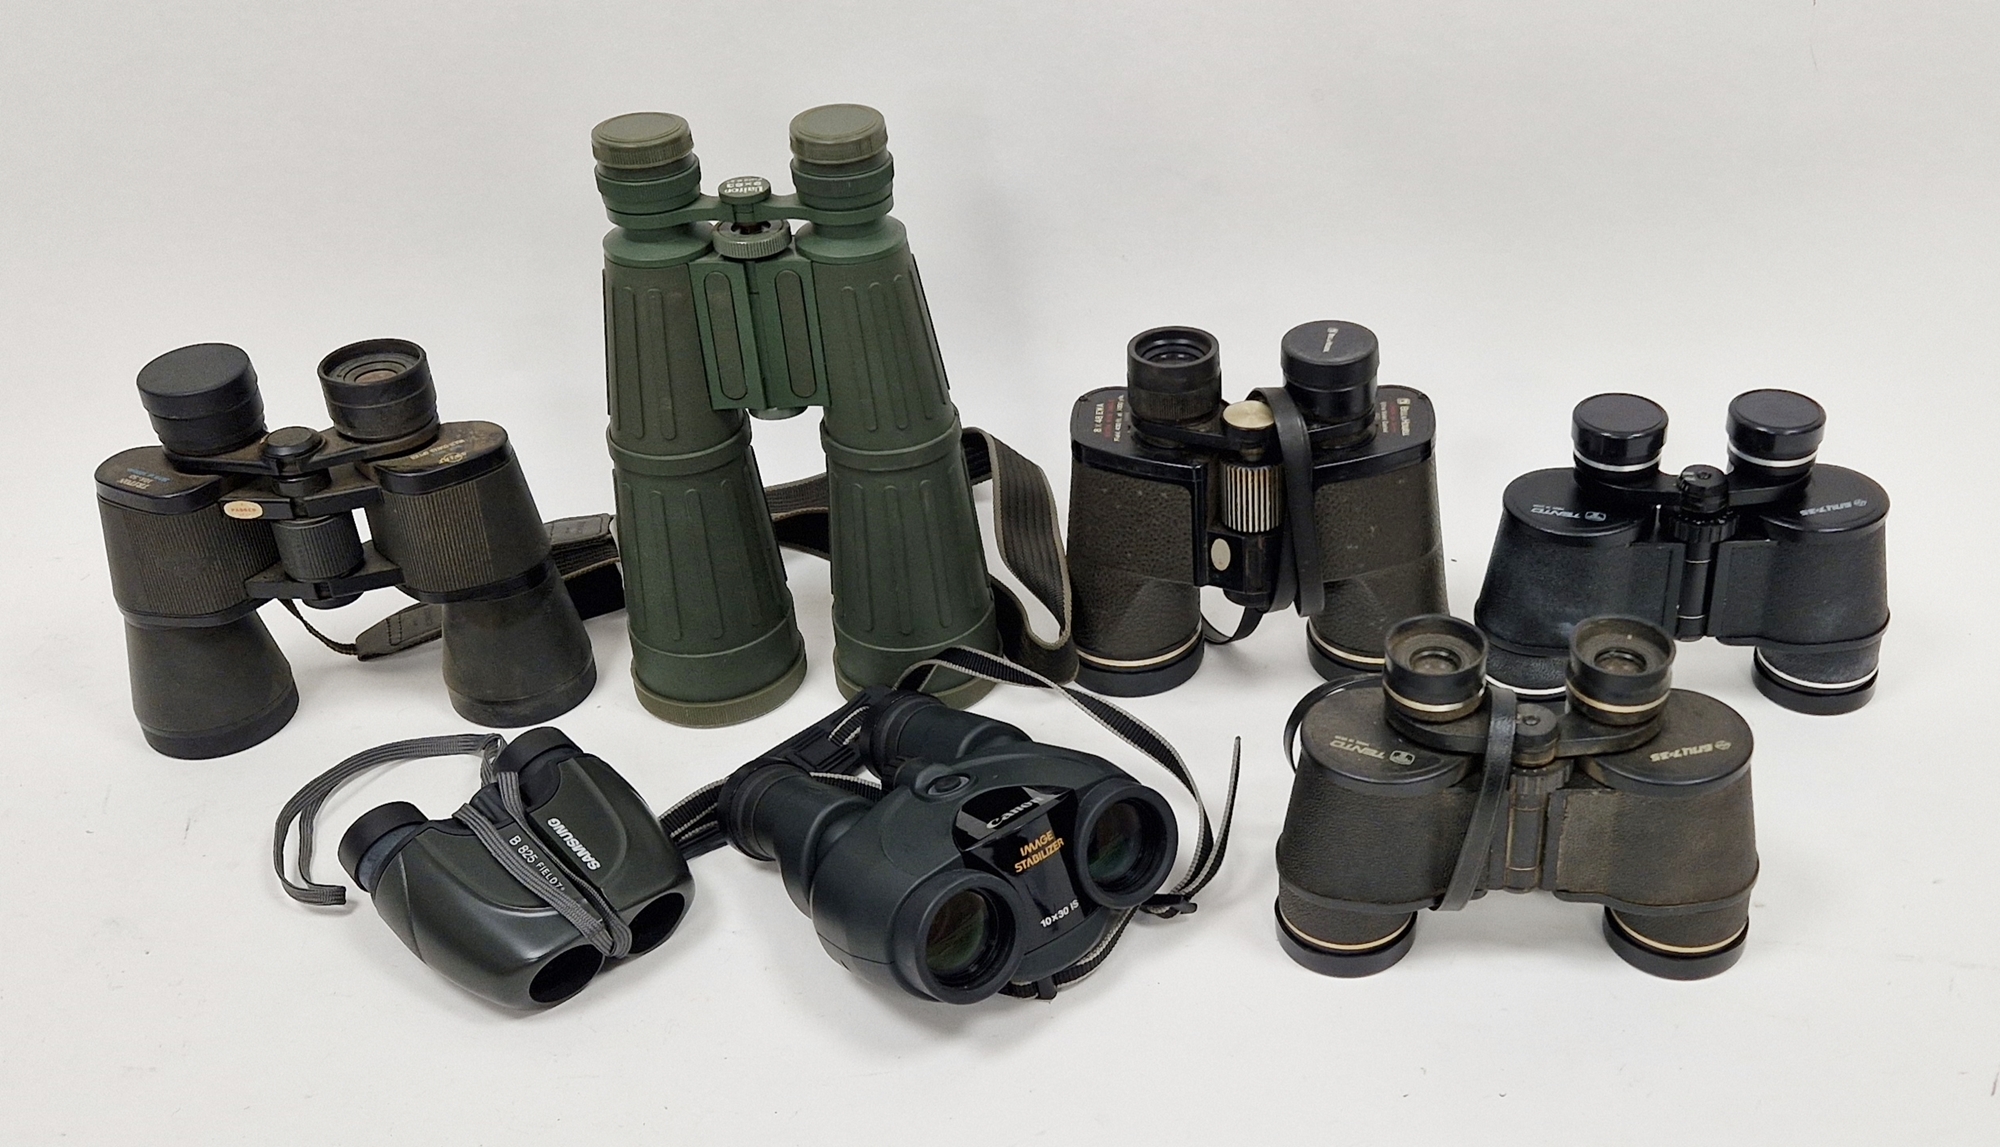 Pair of Bell & Howell binoculars 8x48 EWA, a pair of Tento binoculars, a pair of Canon field